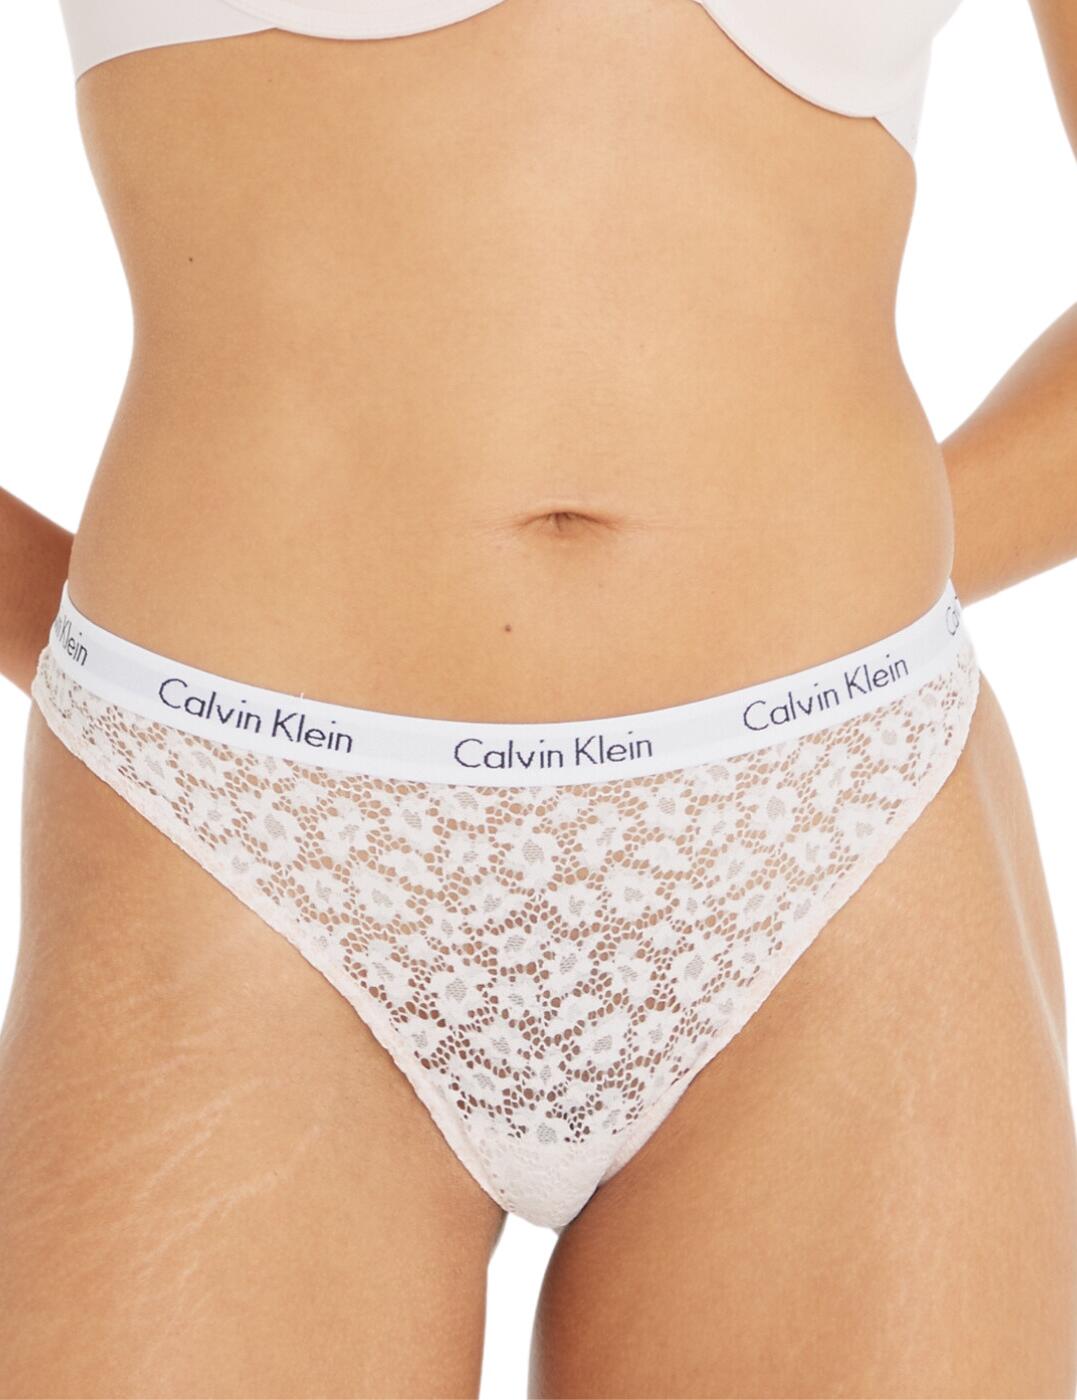 Calvin Klein CK Authentic Brazilian Bikini Brief - Belle Lingerie